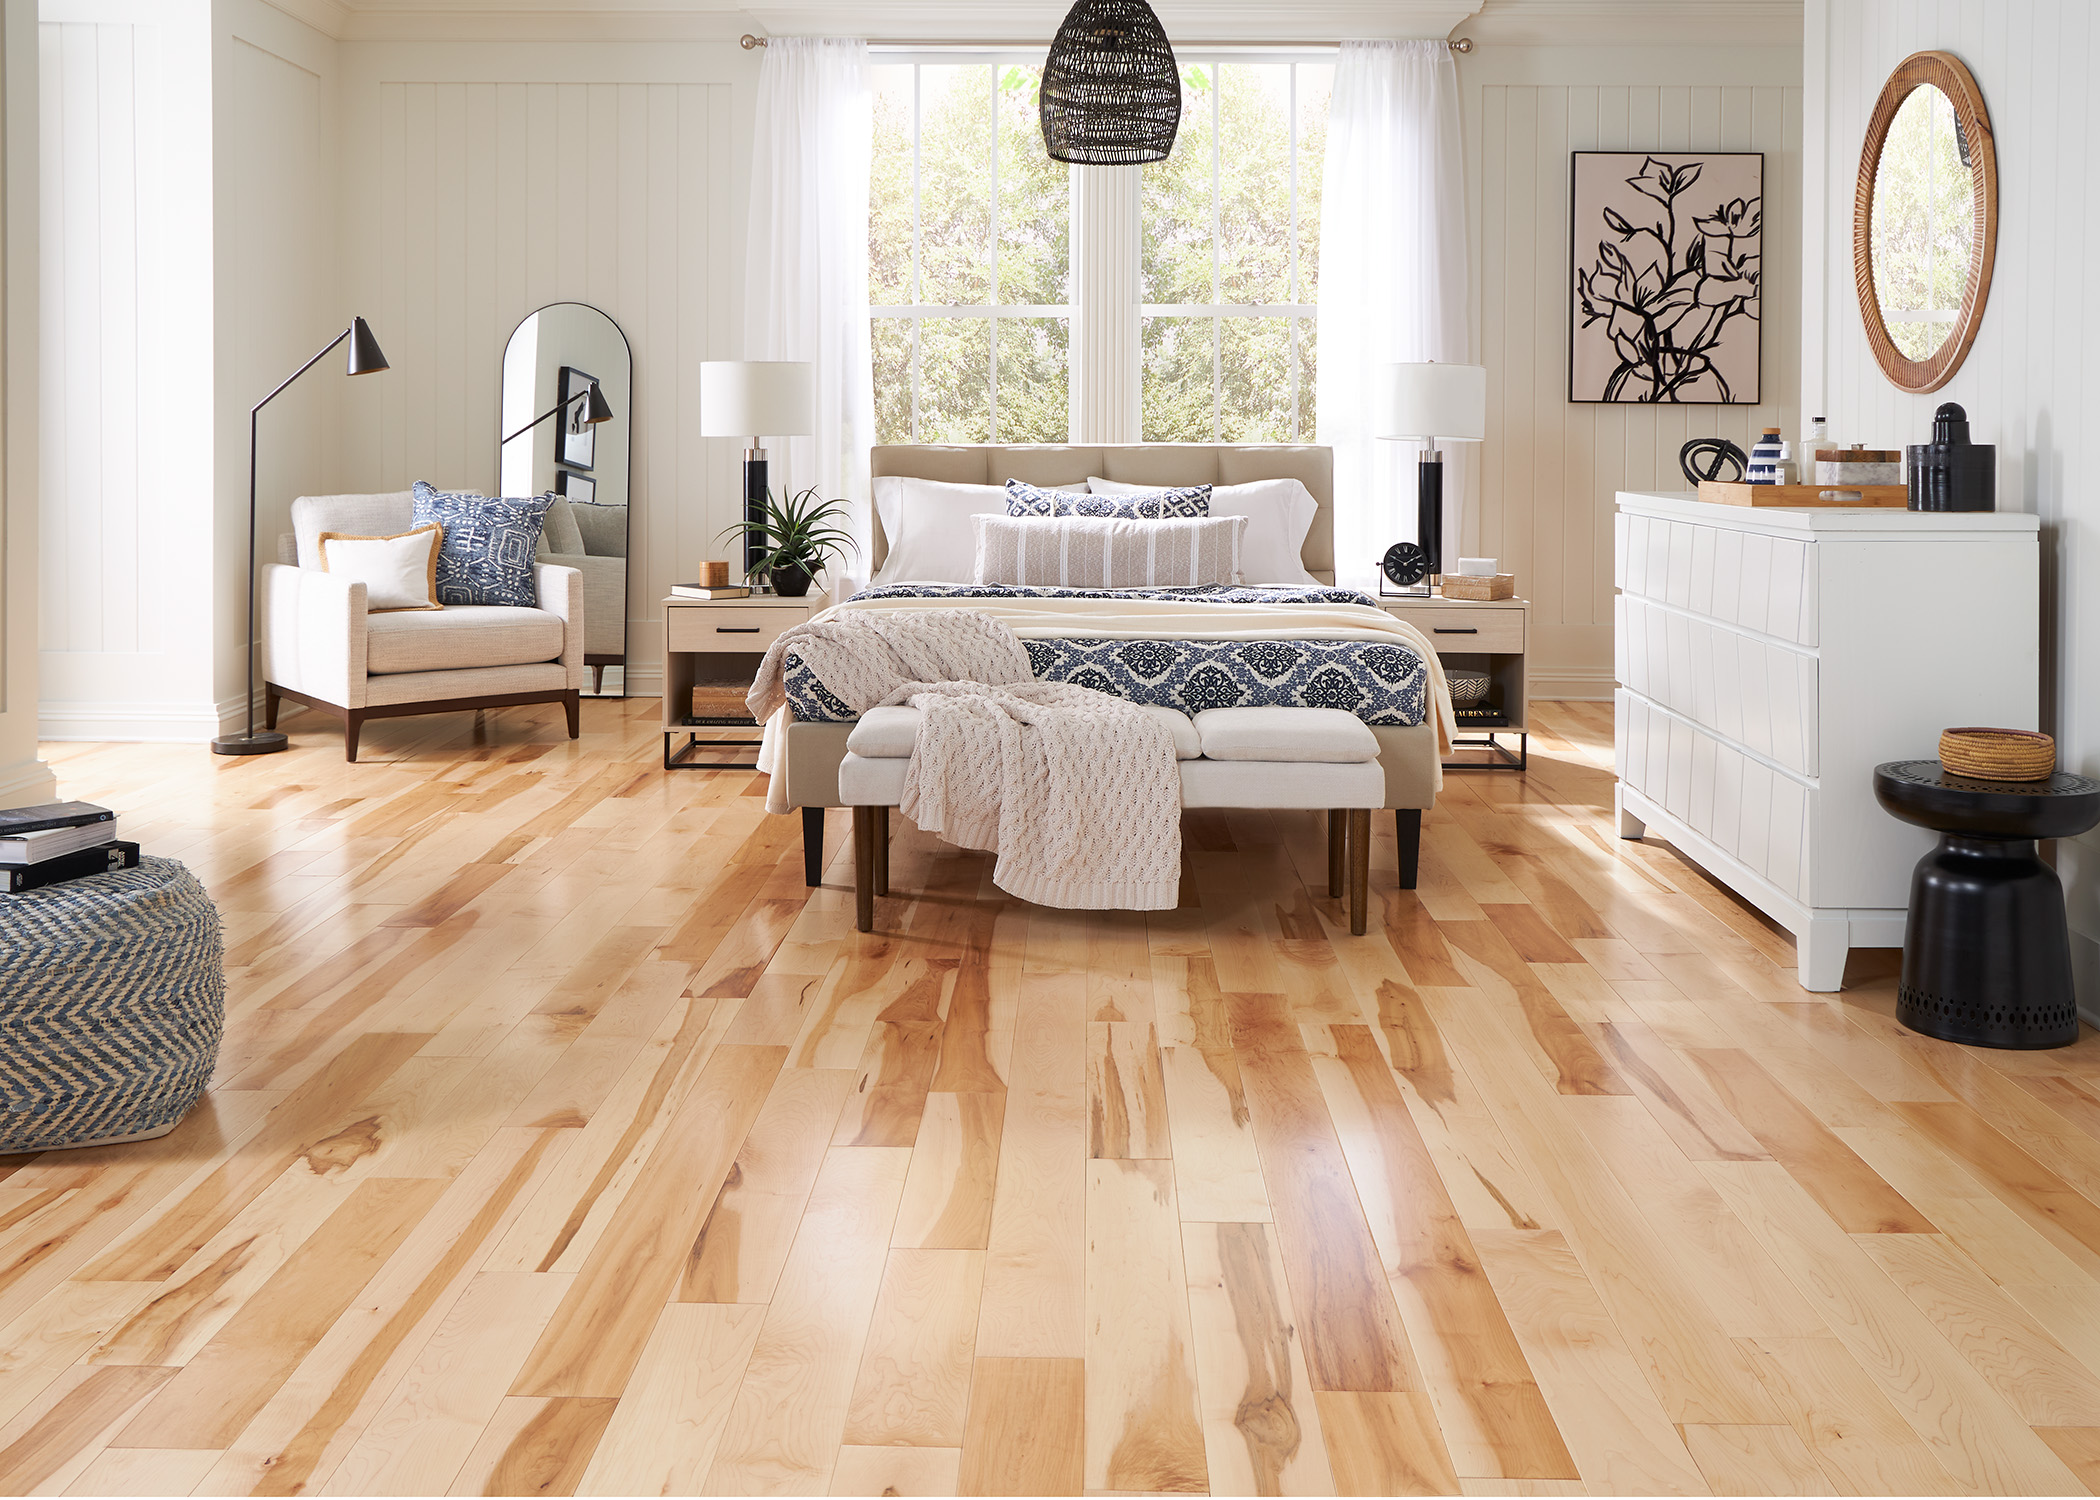 a bedroom with hardwood flooring